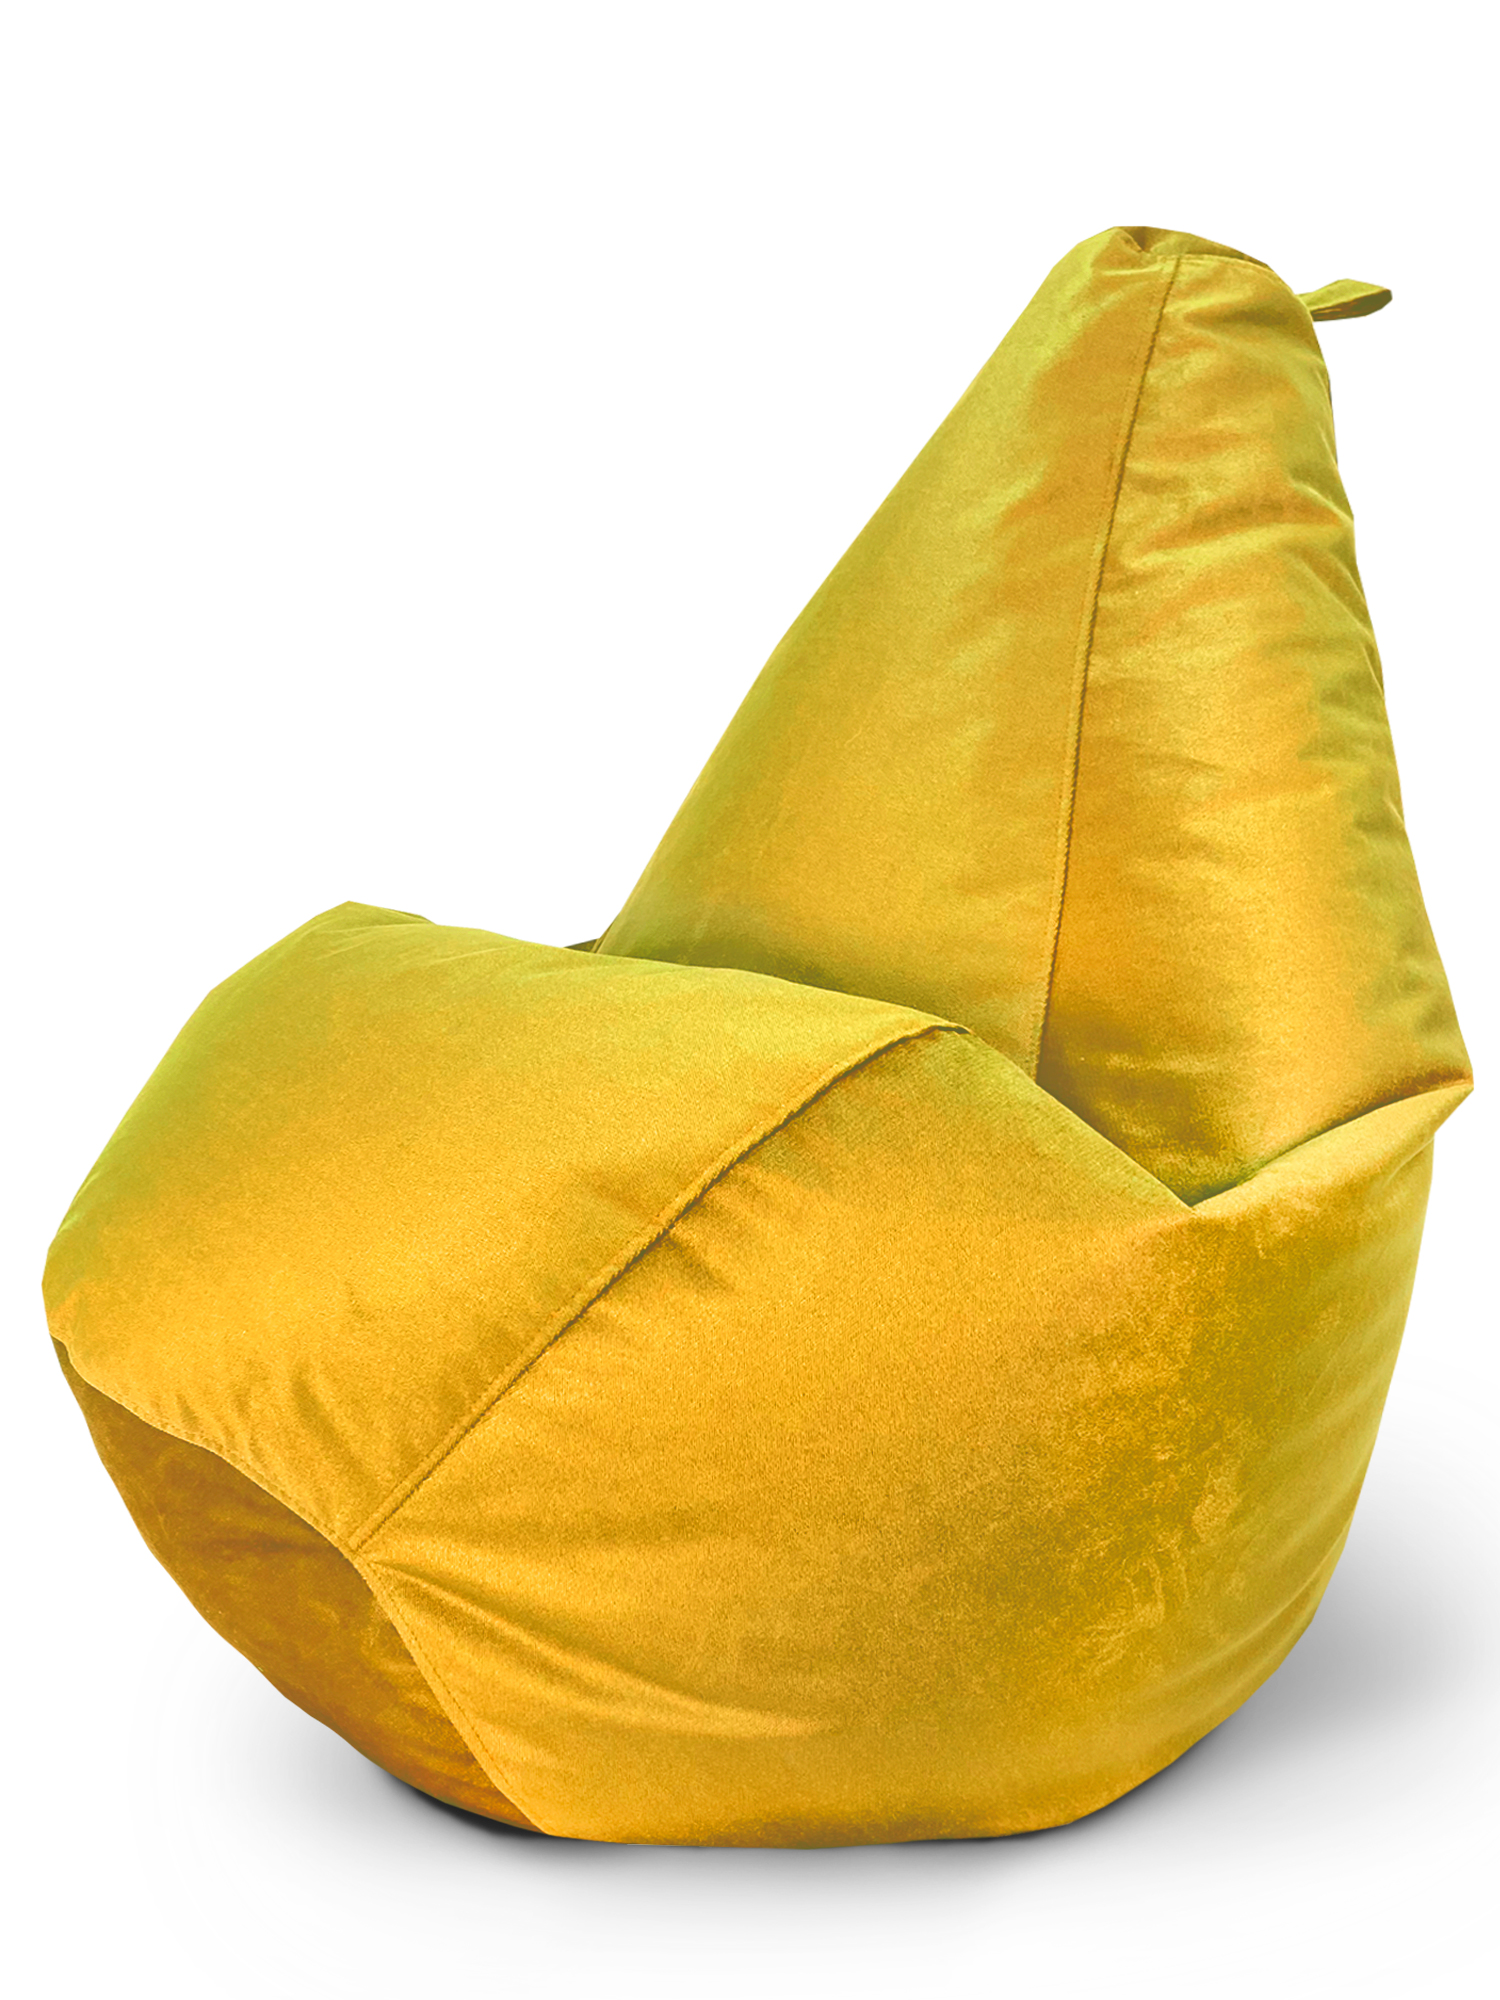 фото Кресло-мешок onpuff пуфик груша, размер xxl, желтый велюр